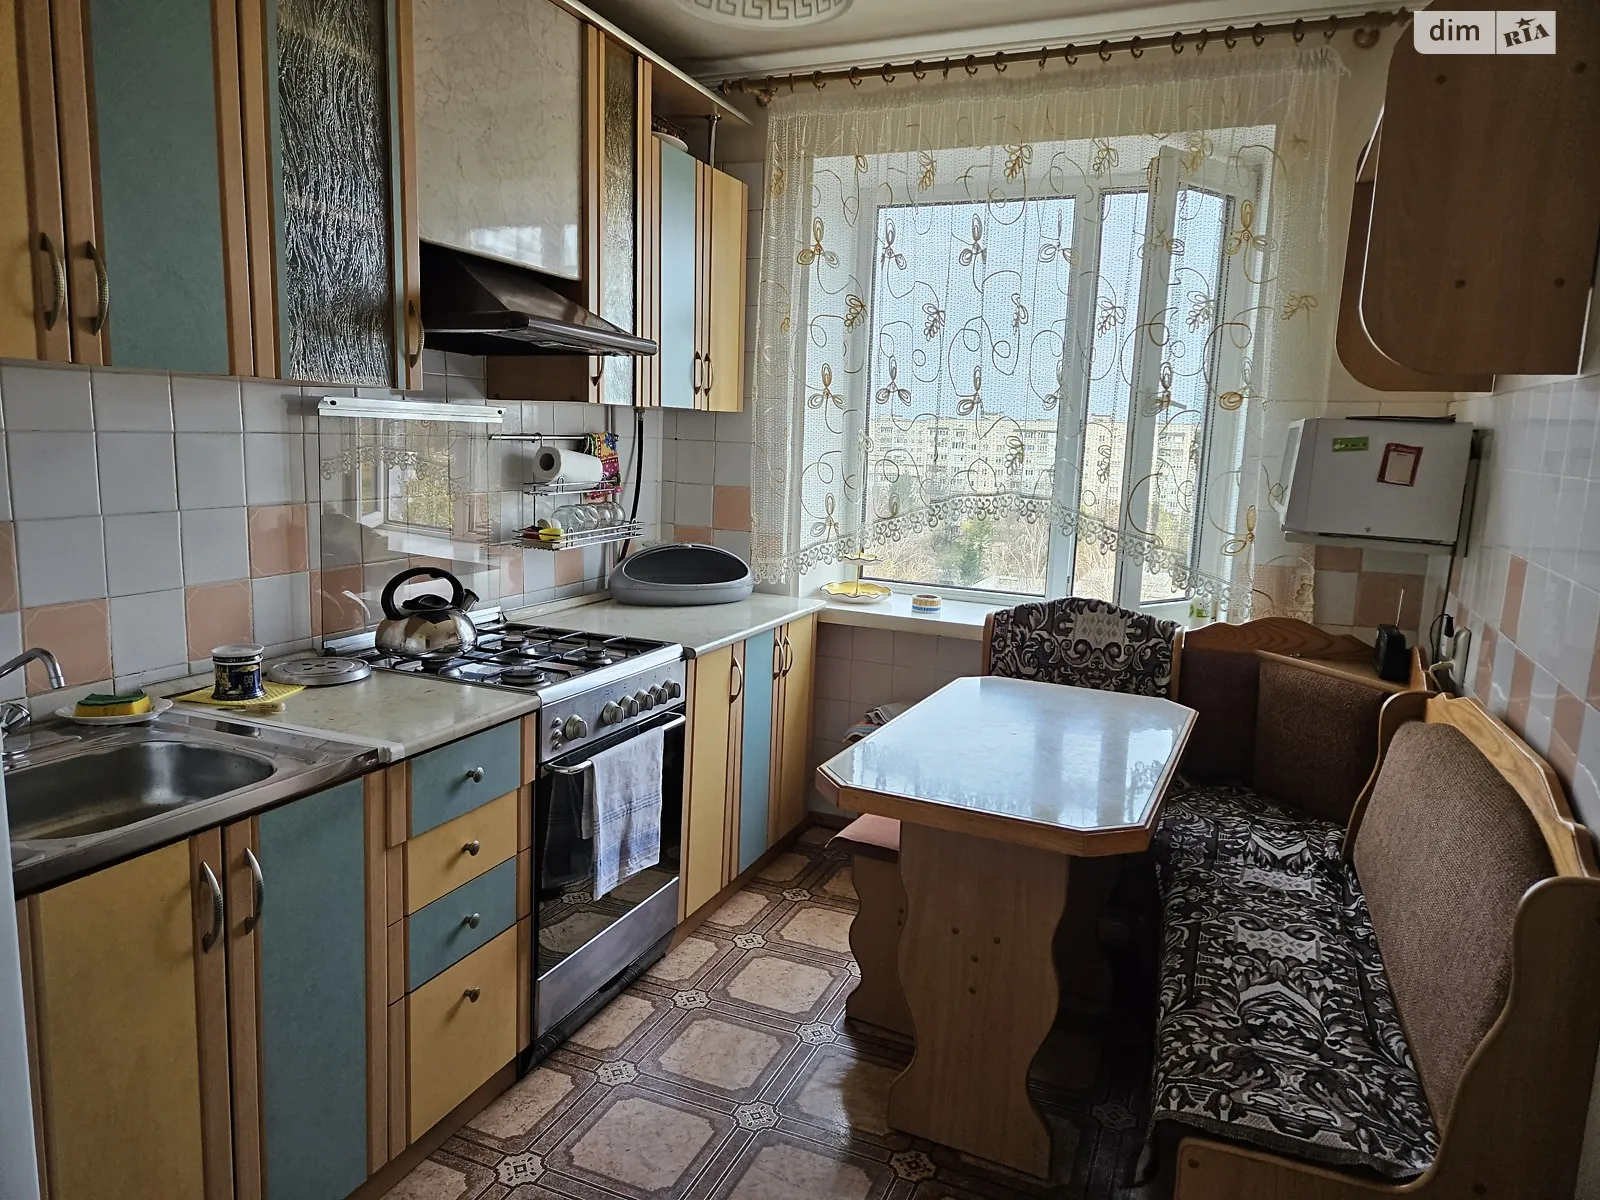 3-кімнатна квартира 65 кв. м у Луцьку, цена: 10000 грн